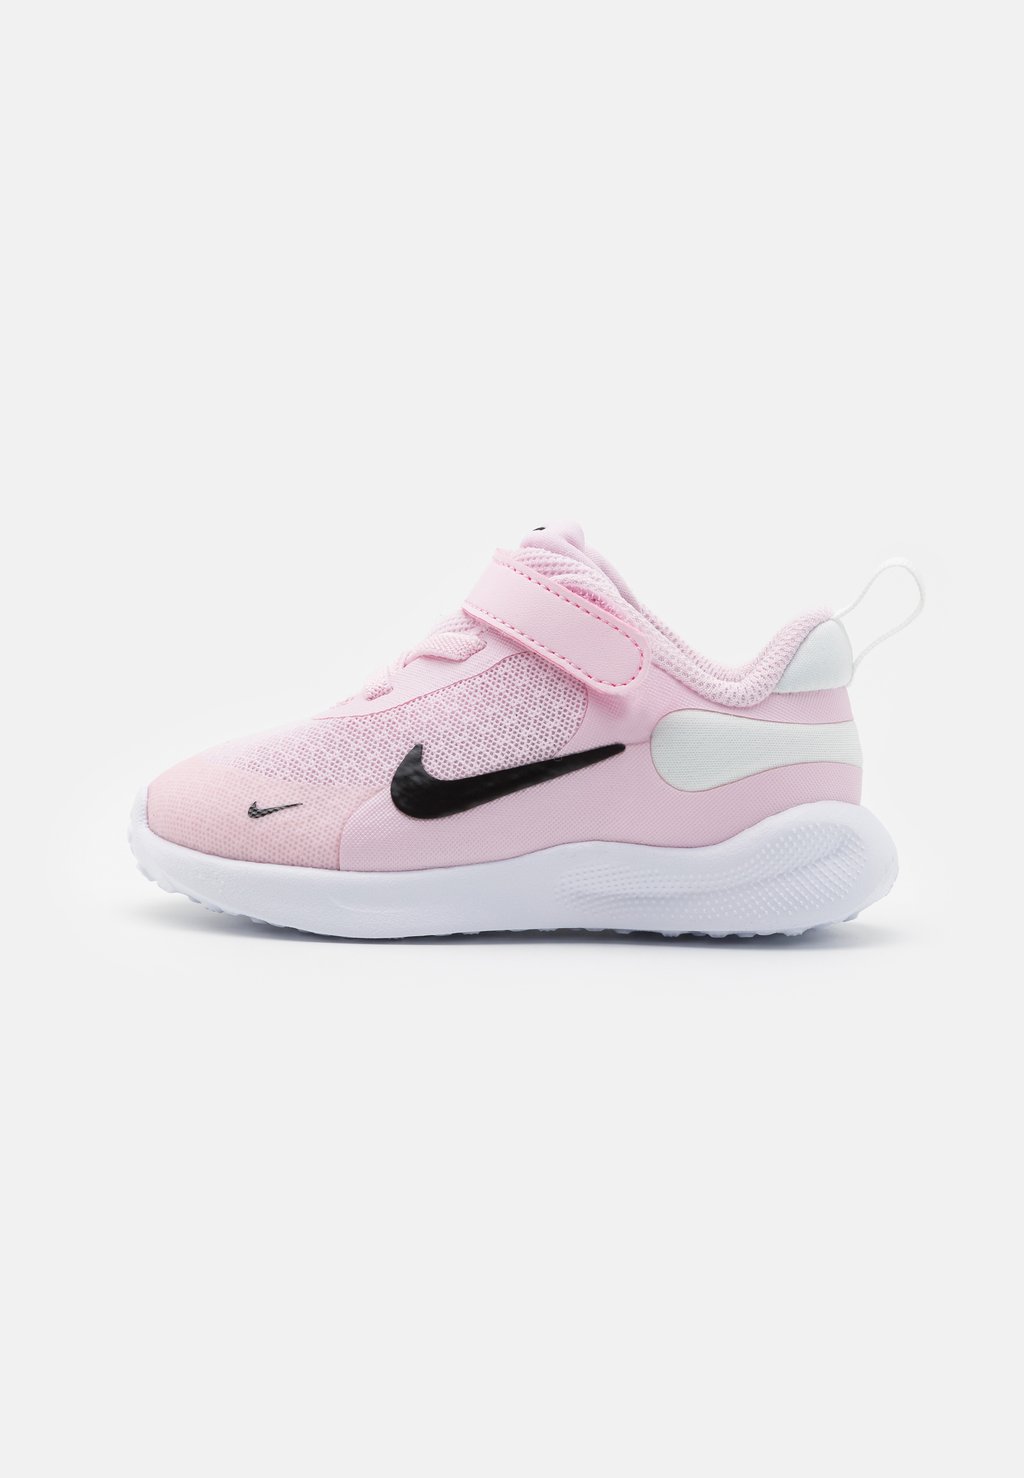 Нейтральные кроссовки Revolution 7 Unisex Nike, цвет pink foam/black/summit white/white